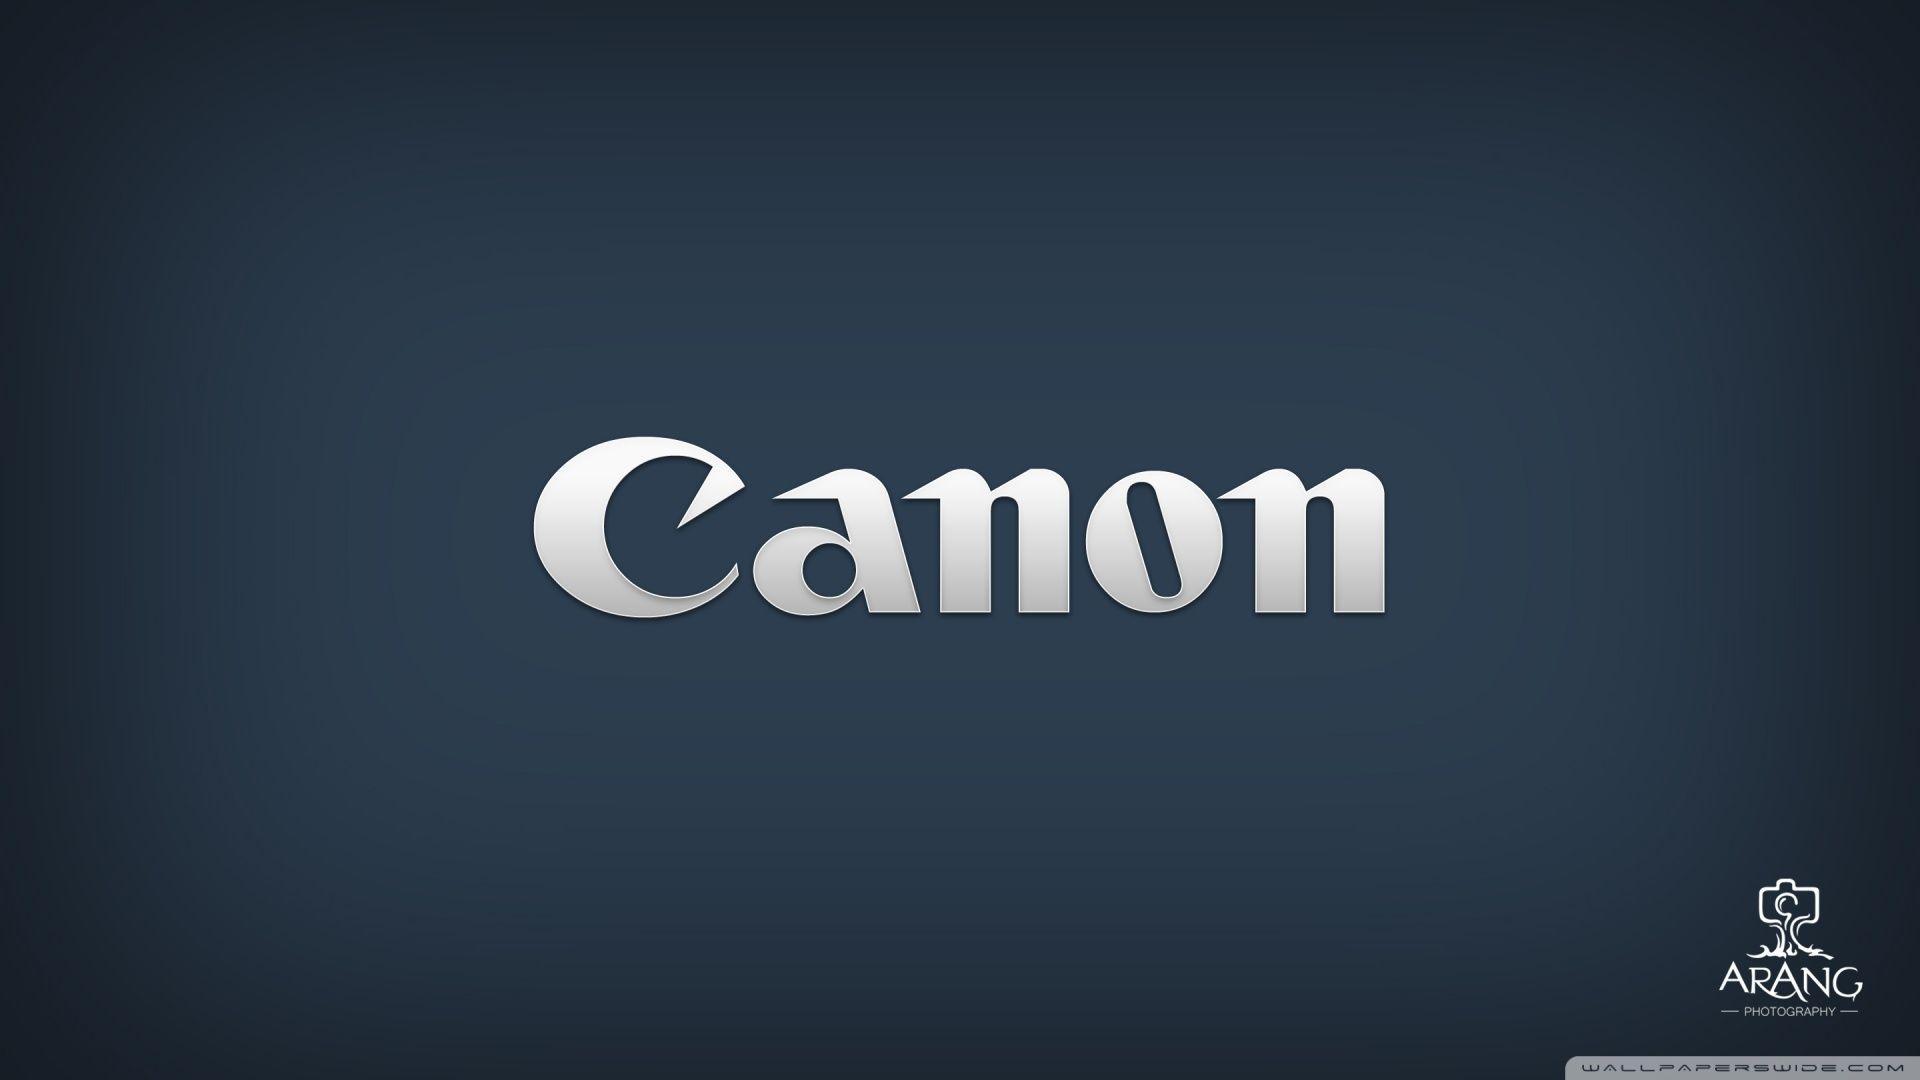 Canon Logo wallpapers HD desktop wallpapers : High Definition : Mobile